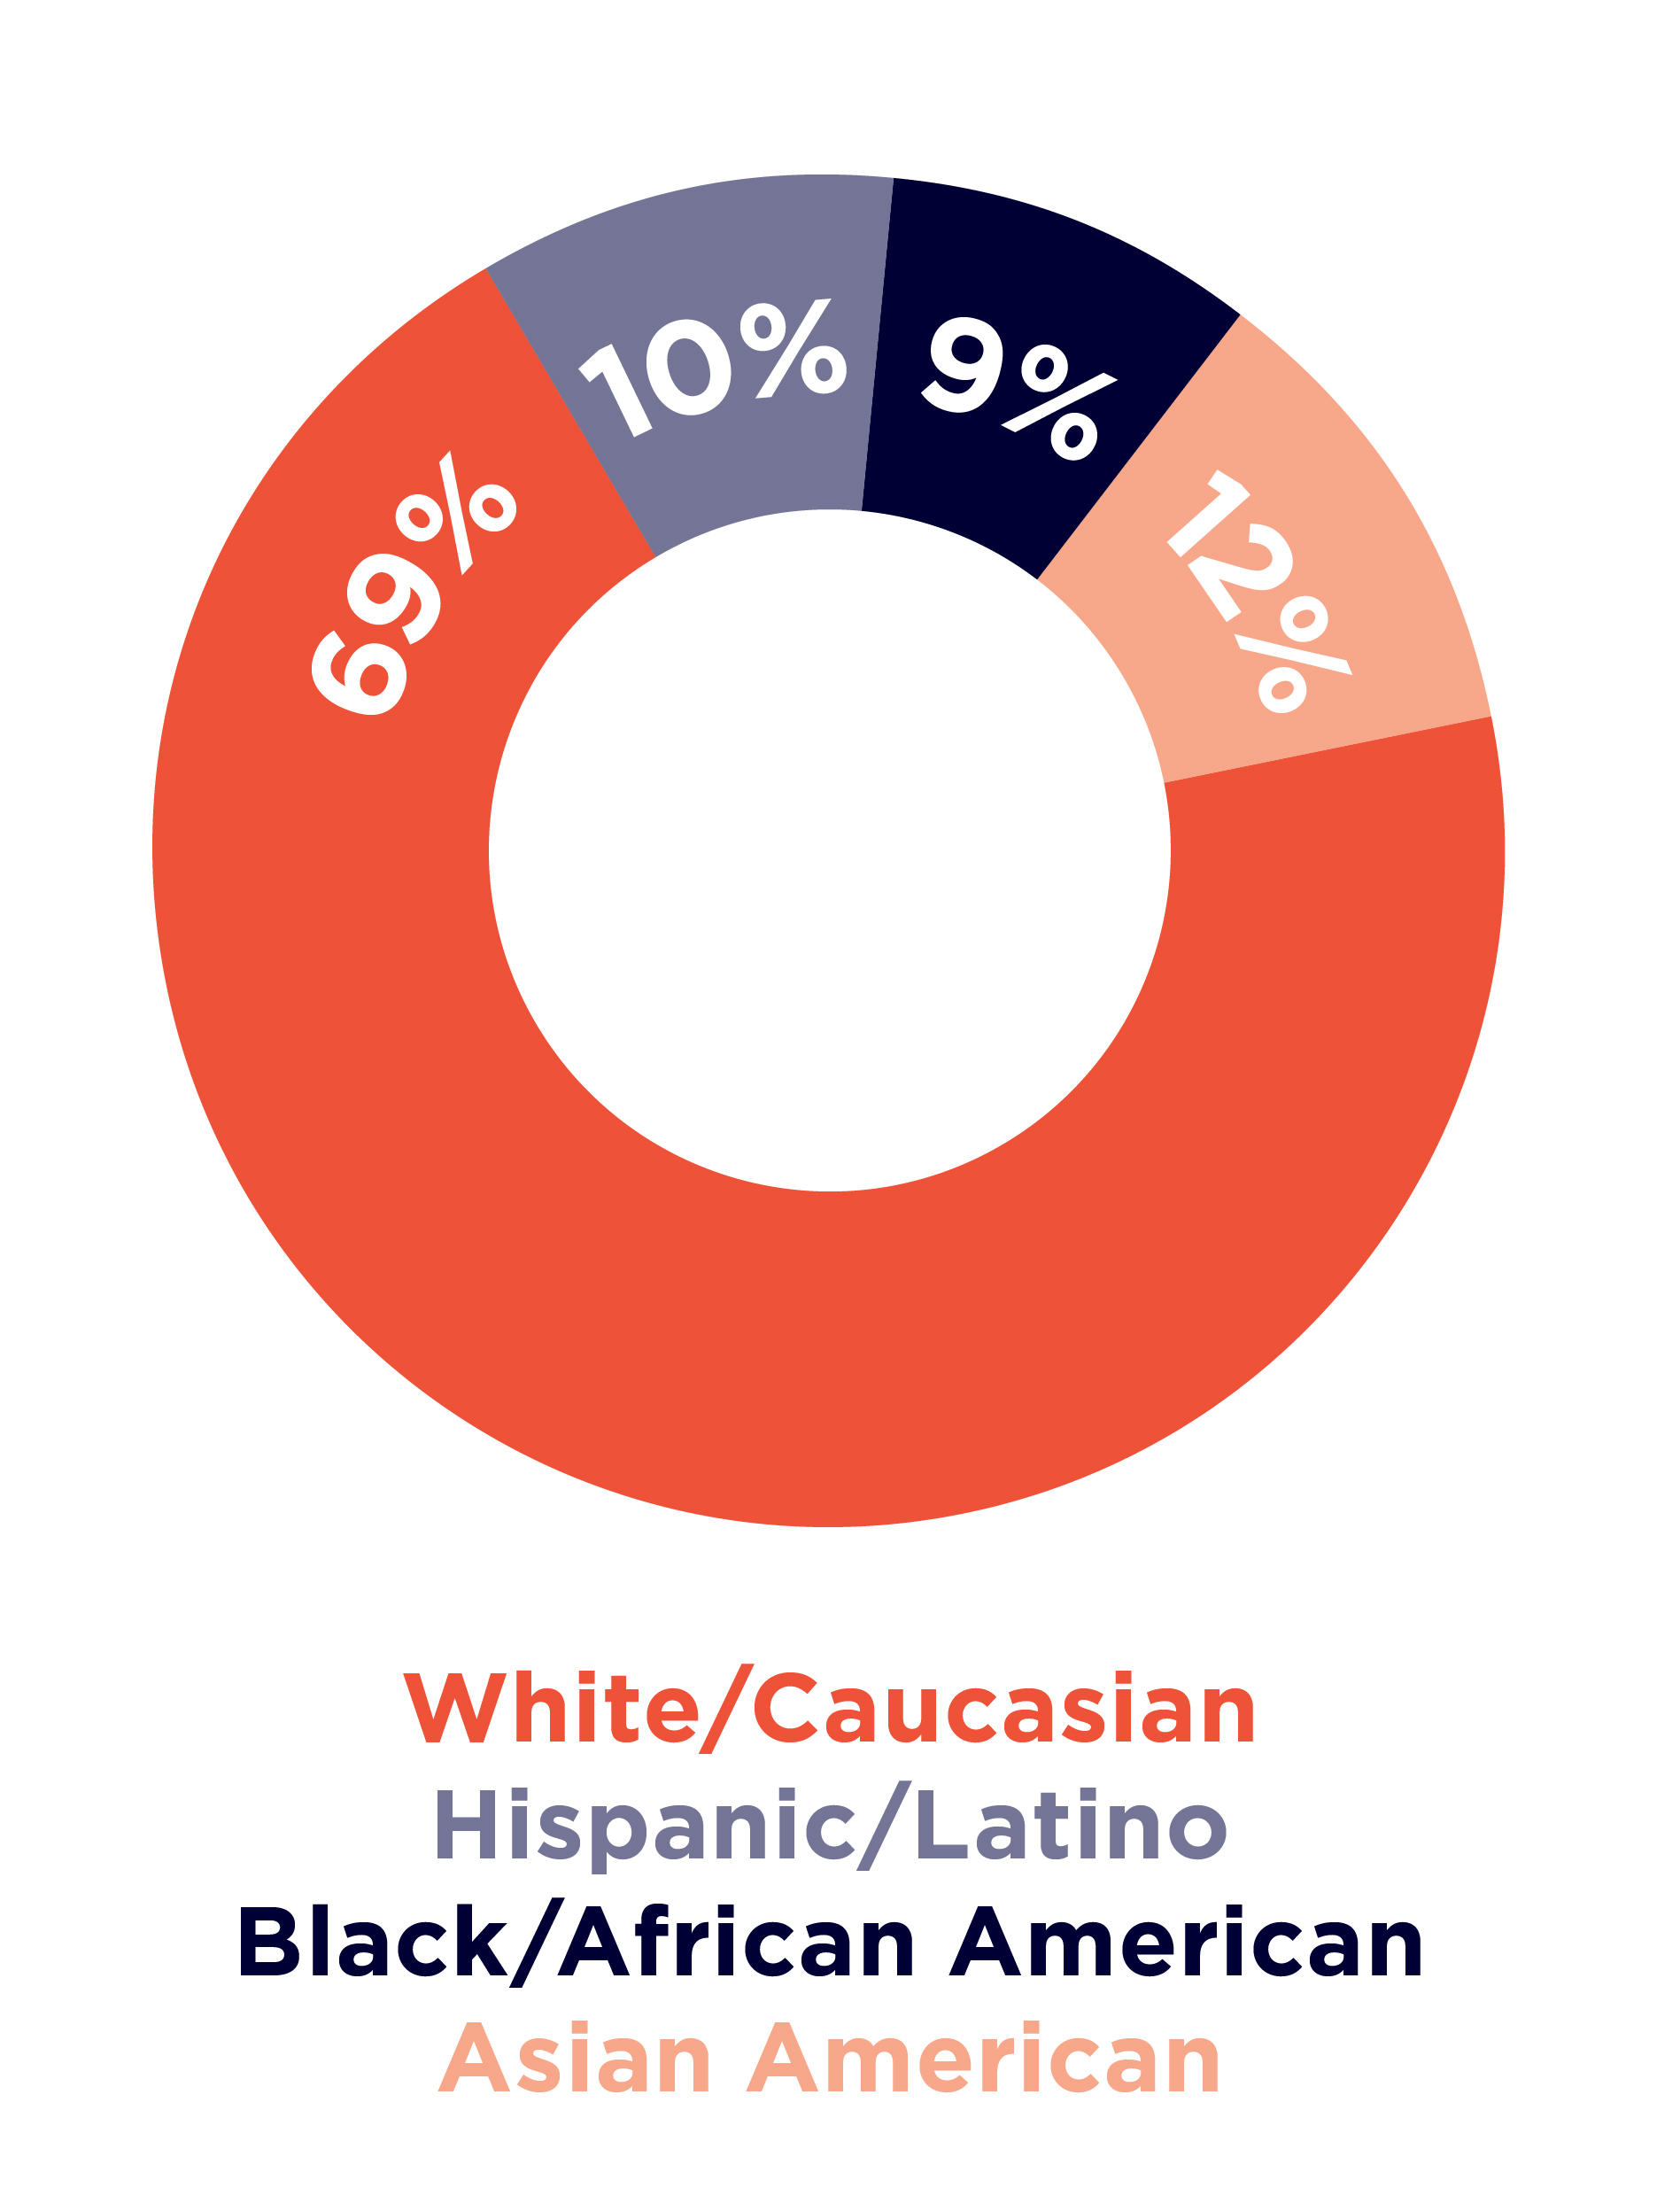 69% white/caucasian; 10% Hispanic/Latino; 9% black/African-American; 12% Asian American